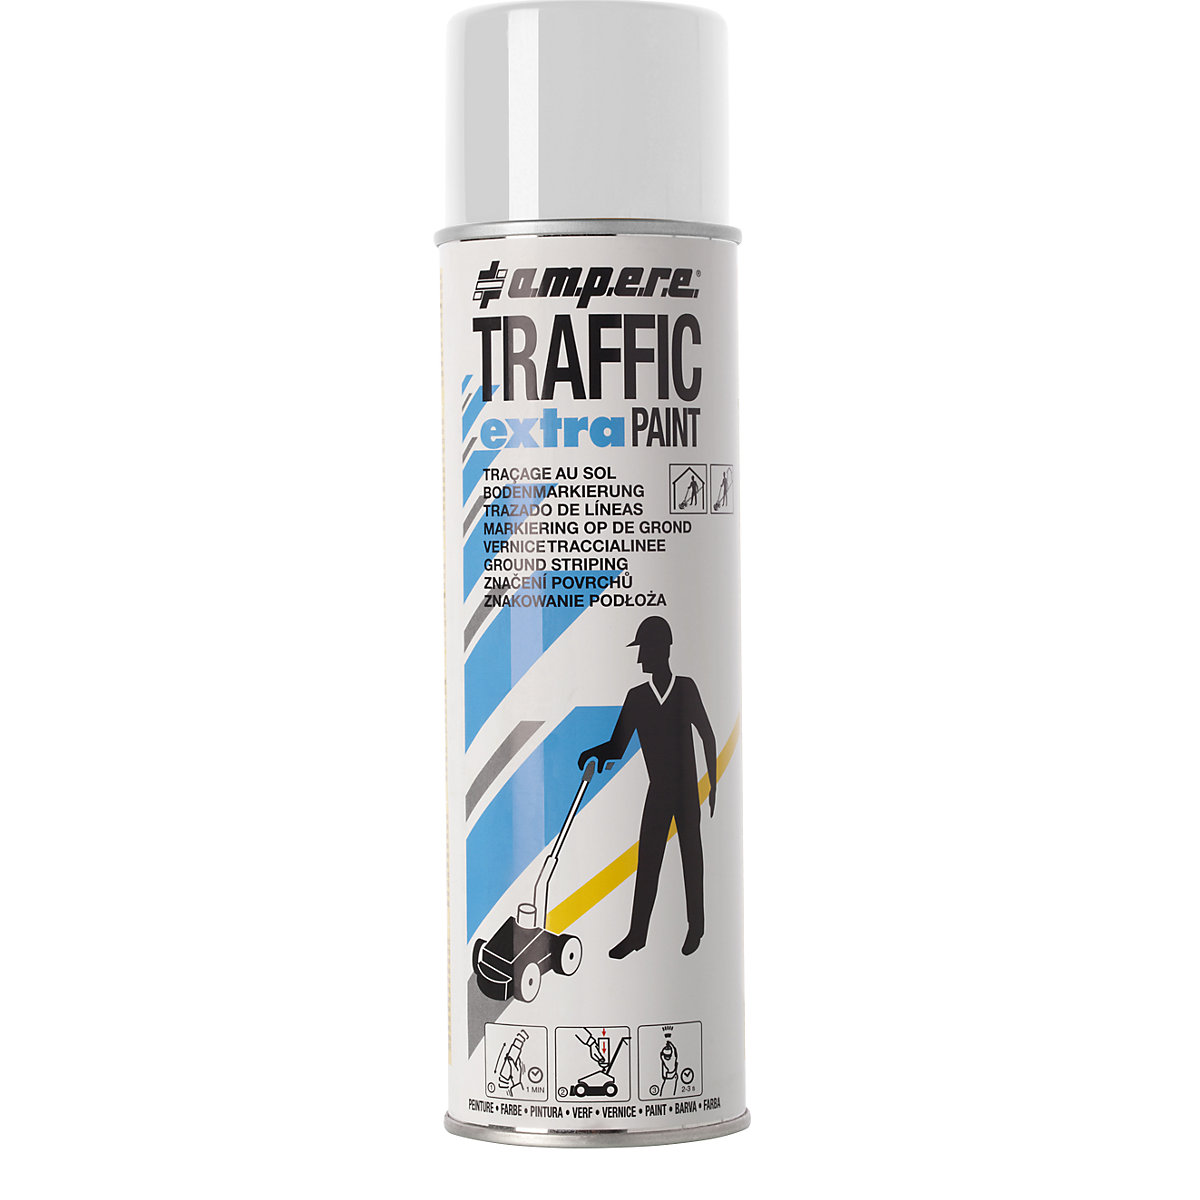 Vernice traccialinee Traffic extra Paint® per impieghi intensi - Ampere